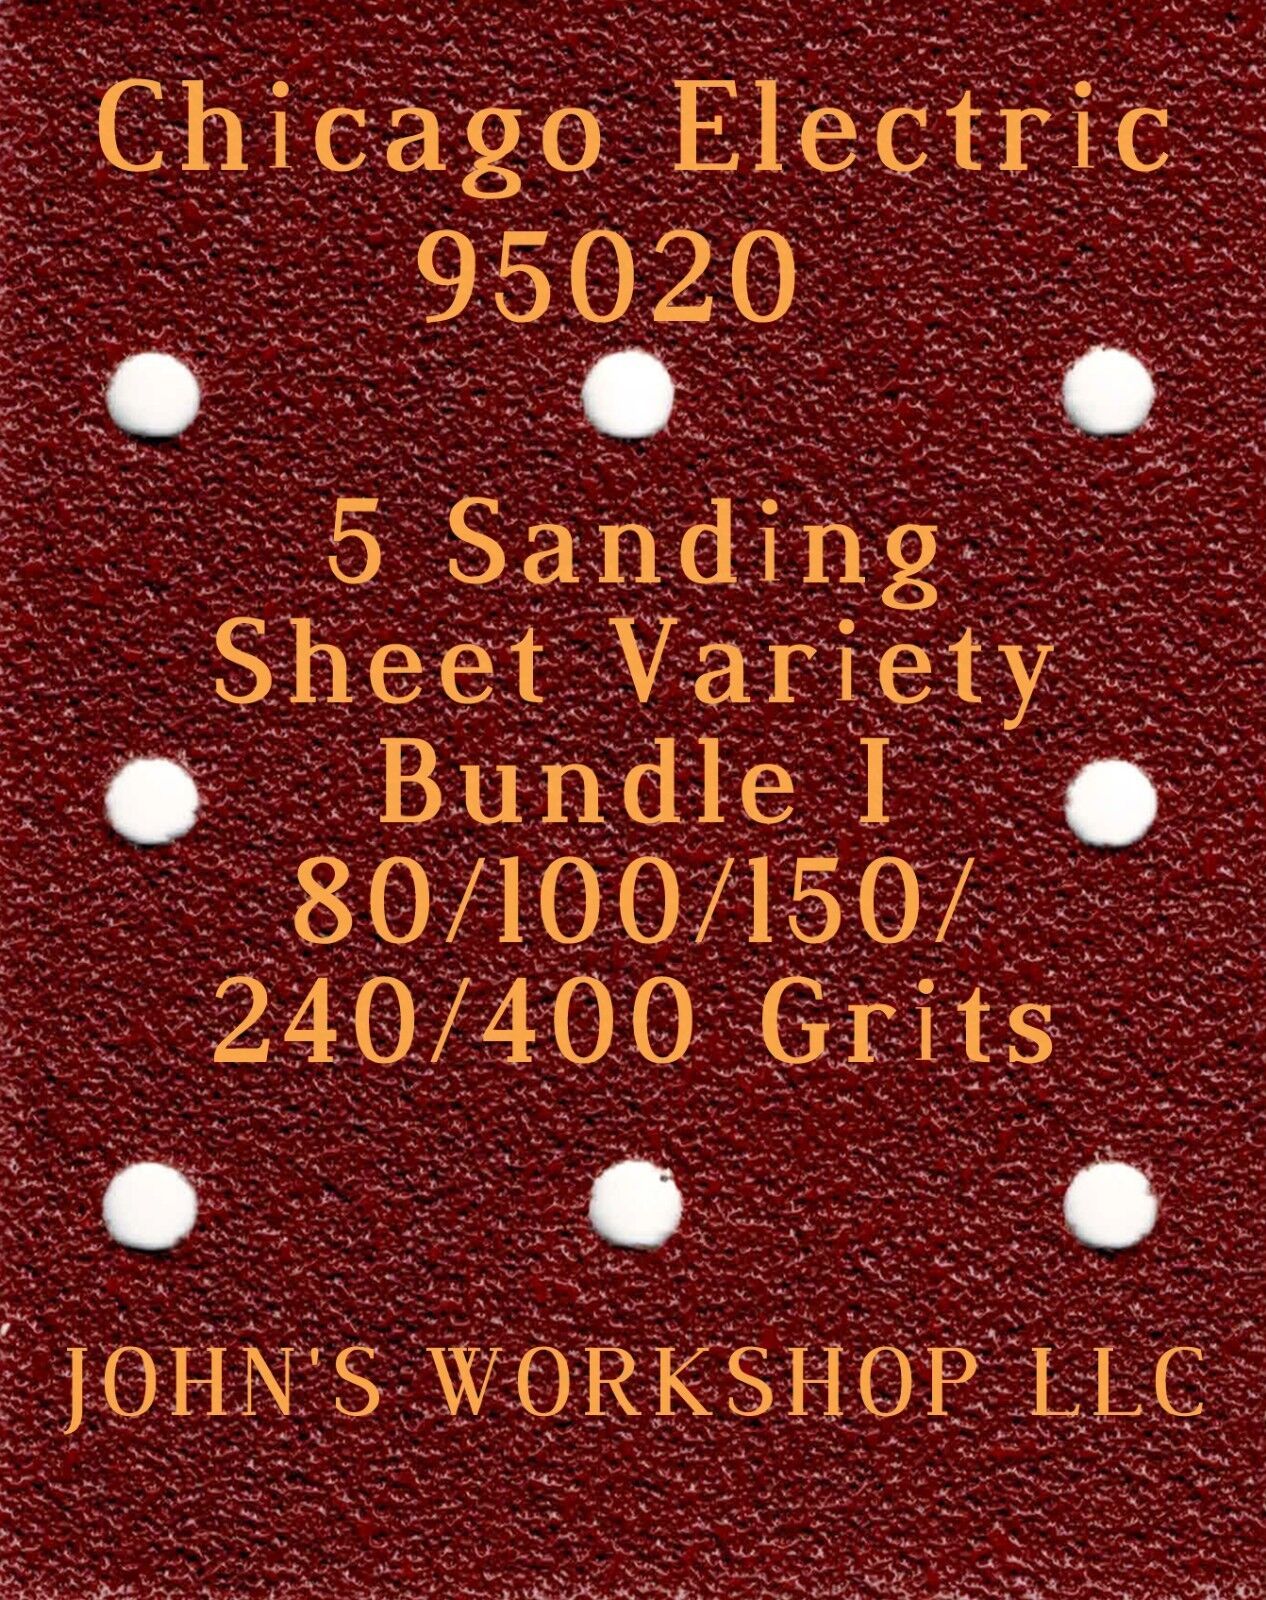 Chicago Electric 95020 - 80/100/150/240/400 Grits - 5 Sandpaper Variety Bundle I - $4.99